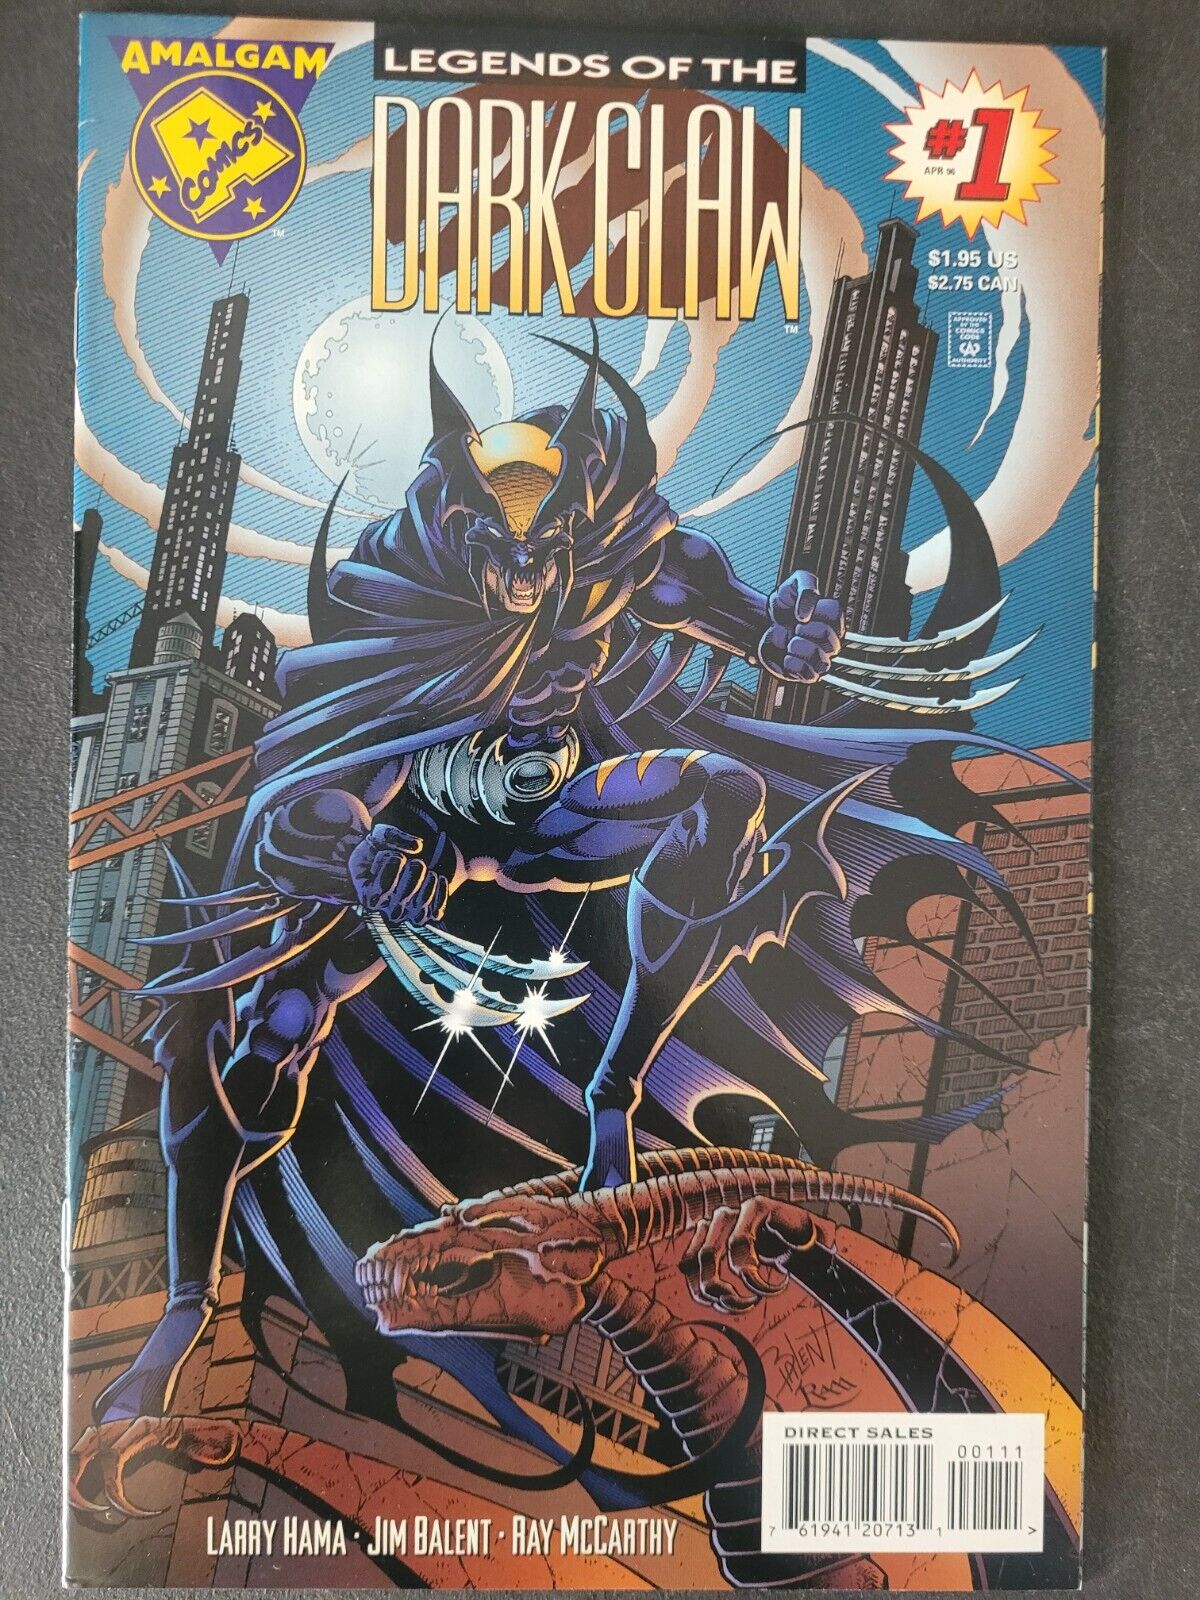 LEGENDS OF THE DARK CLAW #1 (1996) DC MARVEL AMALGAM COMICS WOLVERINE BATMAN